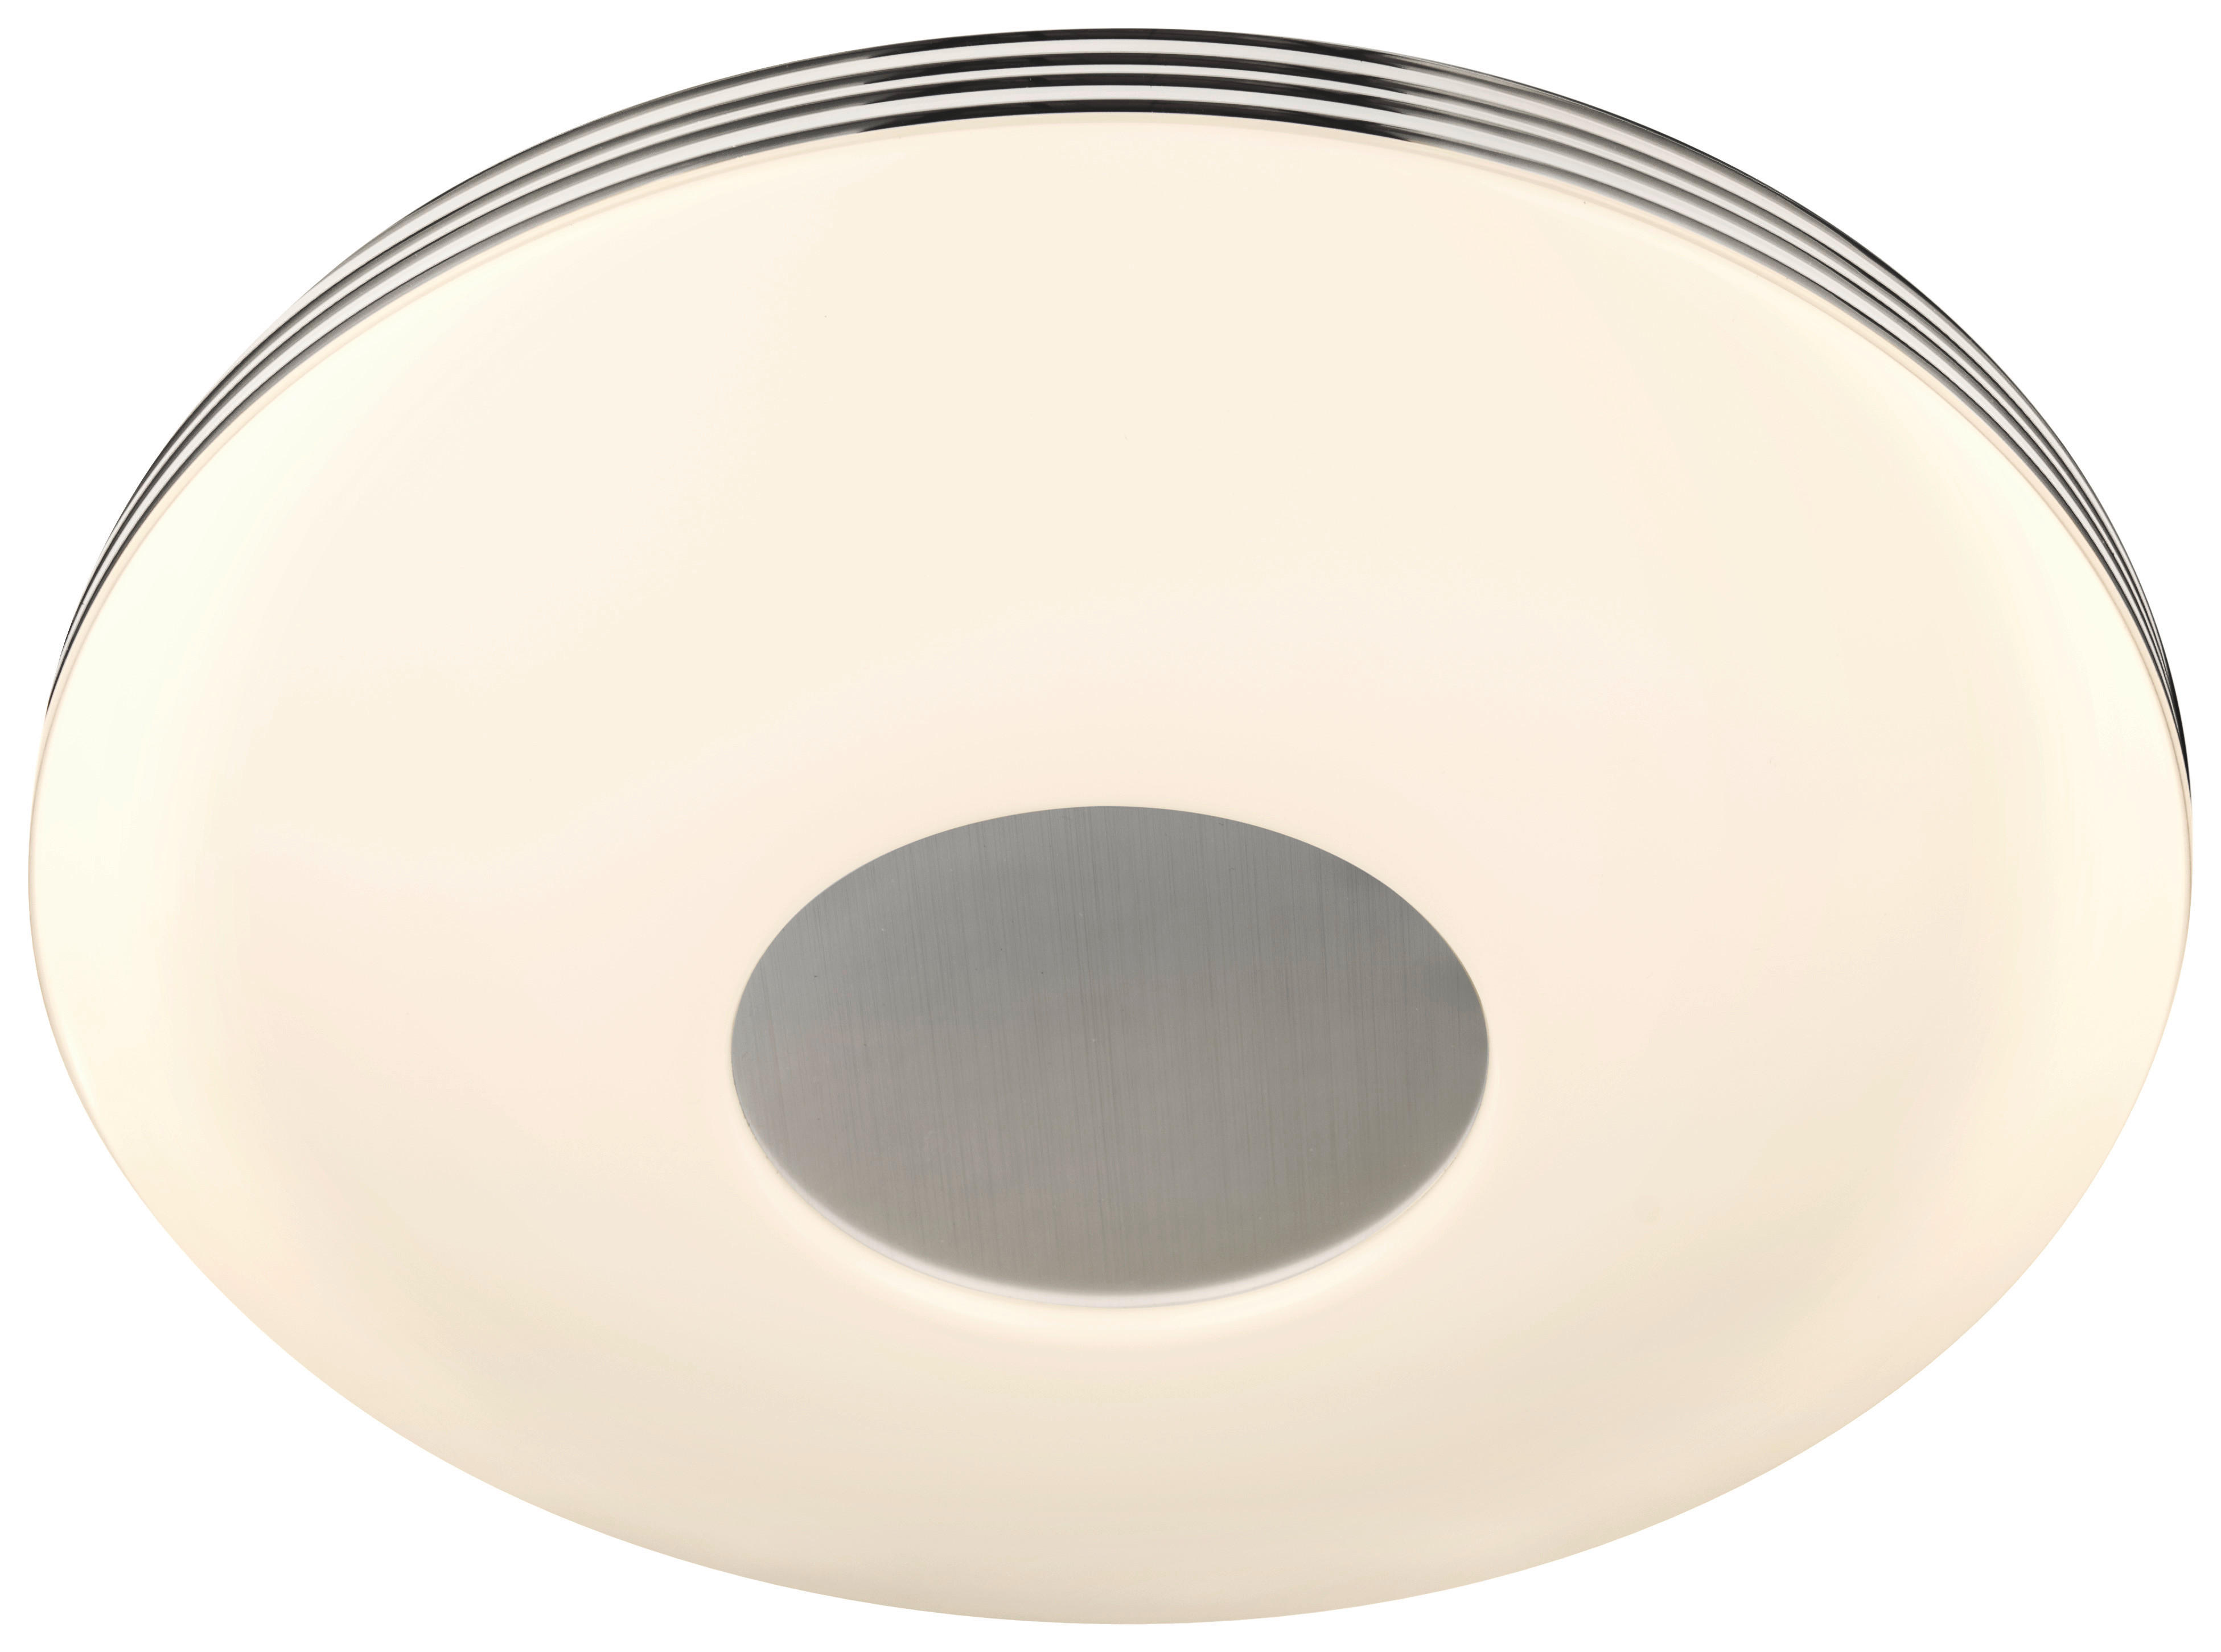 LED STROPNÁ LAMPA, 34 cm - biela/chrómová, Basics, kov/plast (34cm) - Novel